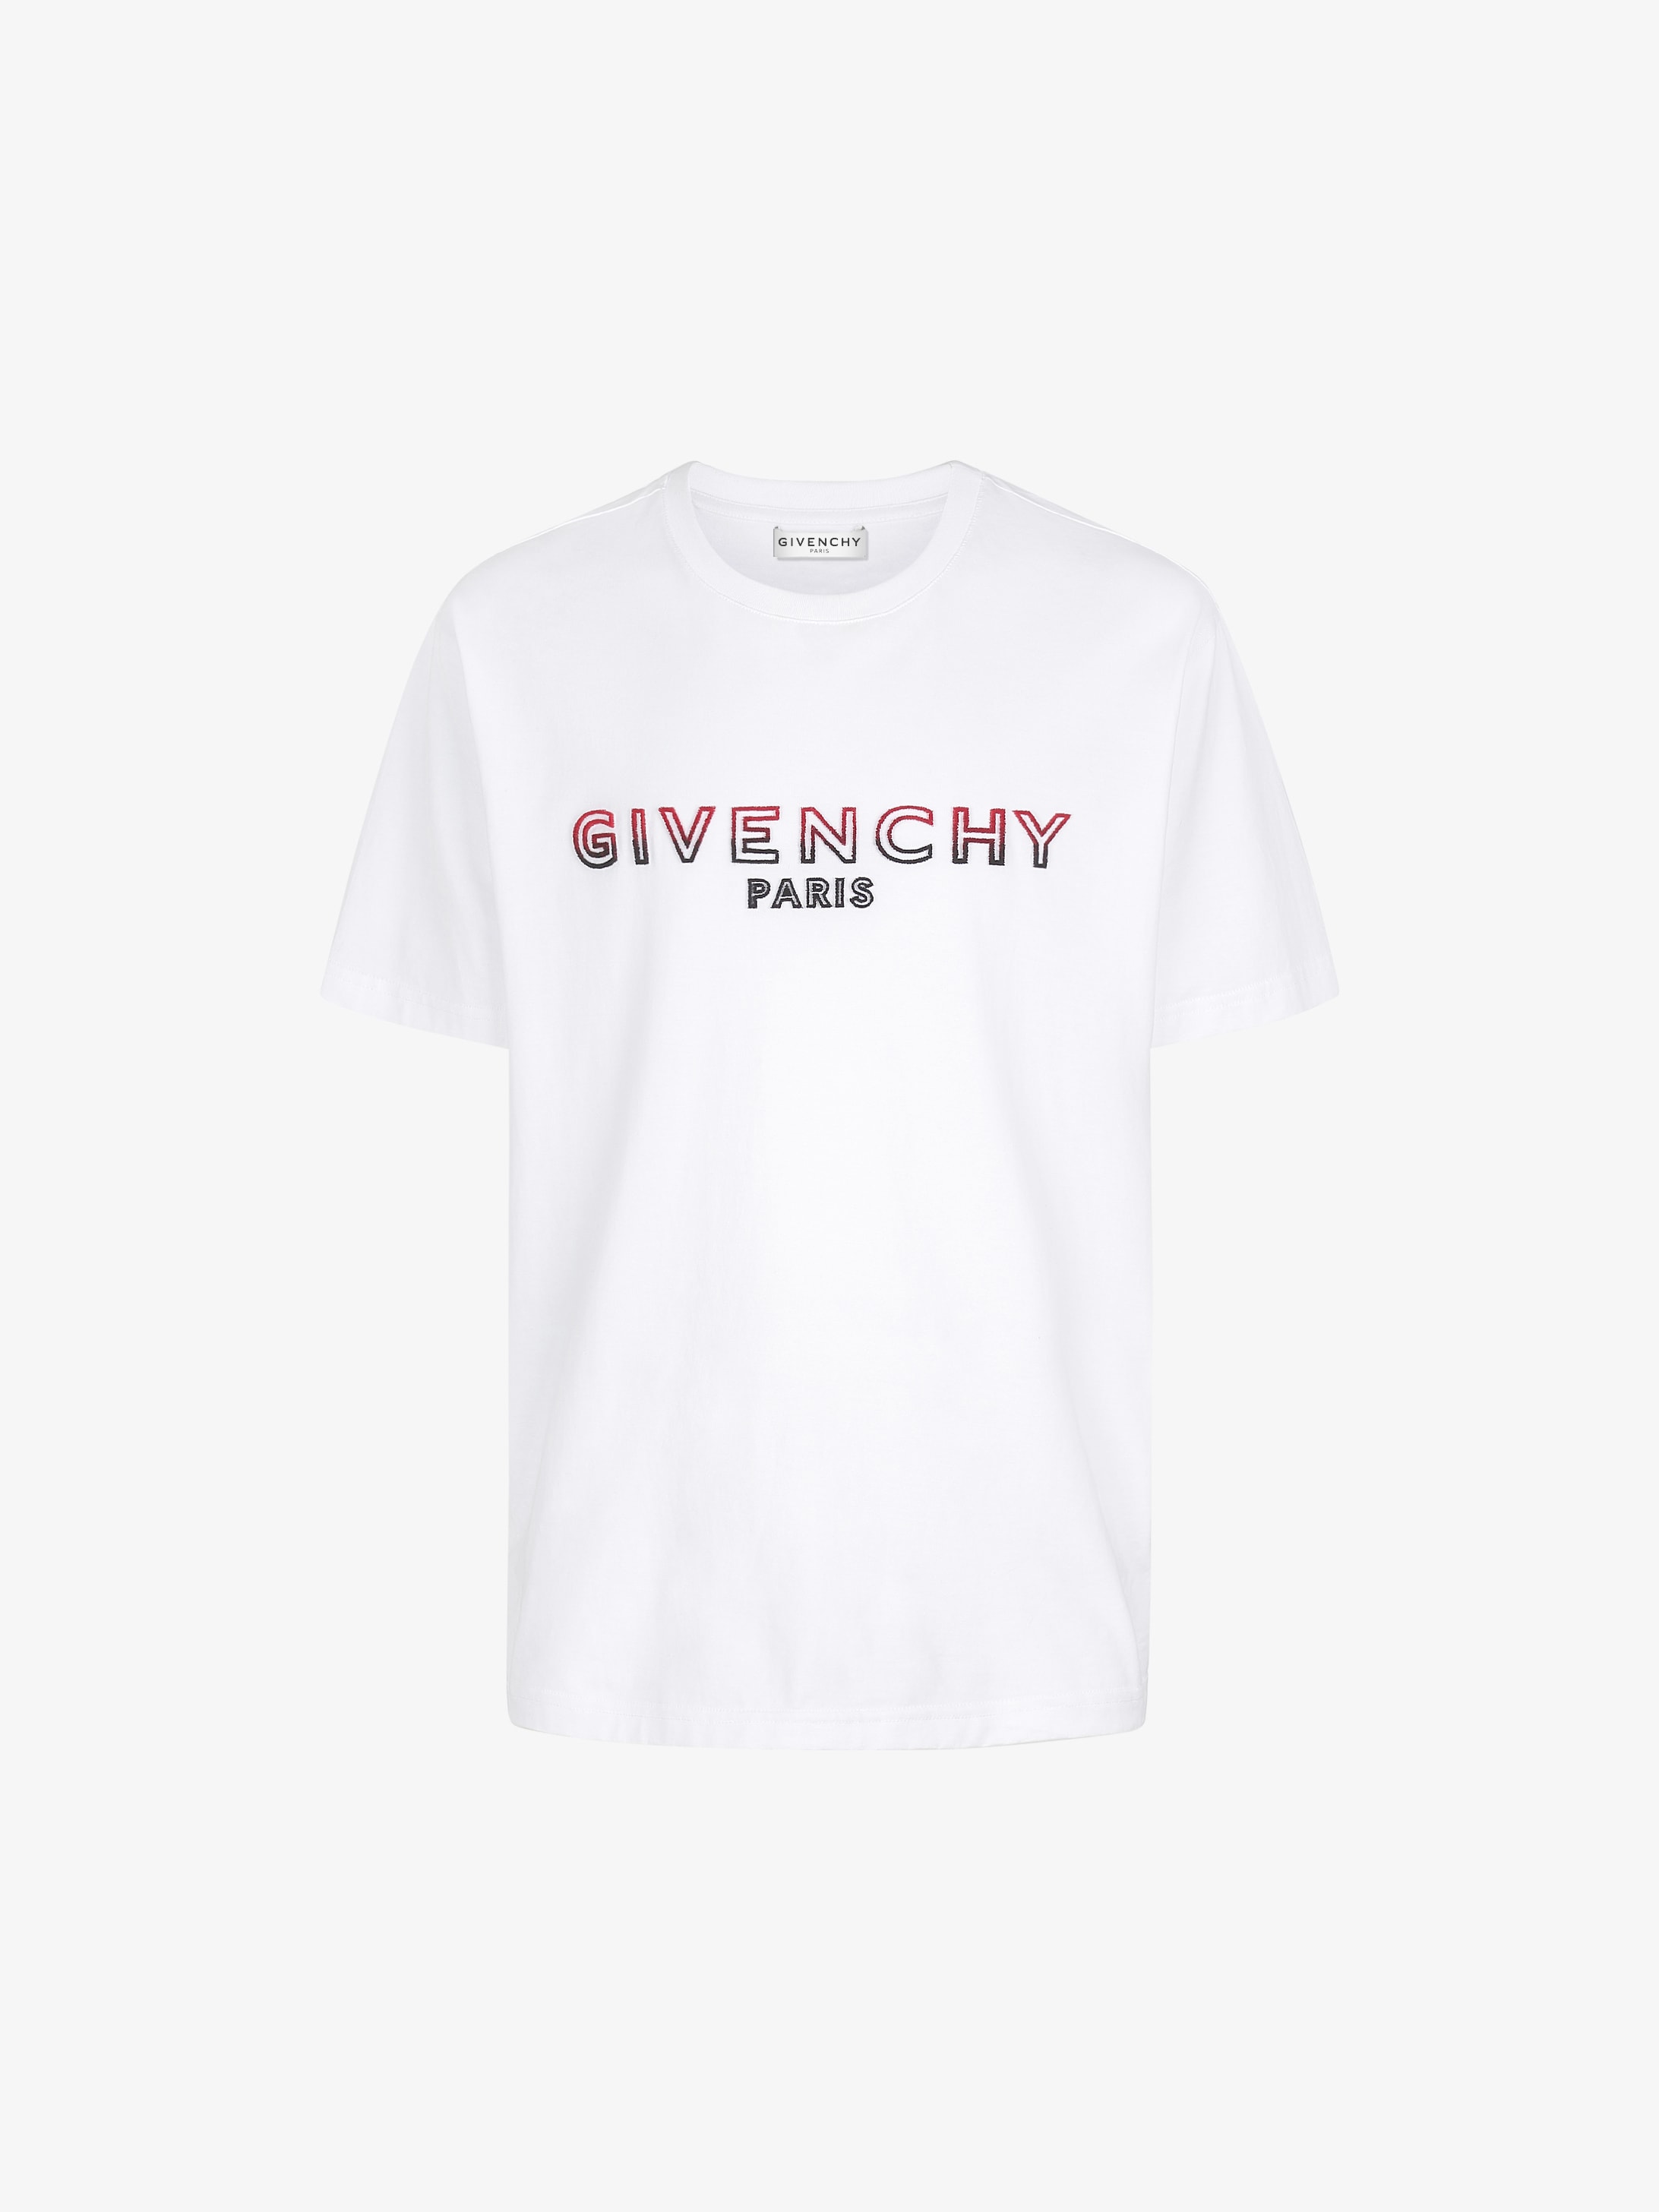 GIVENCHY faded t-shirt | GIVENCHY Paris